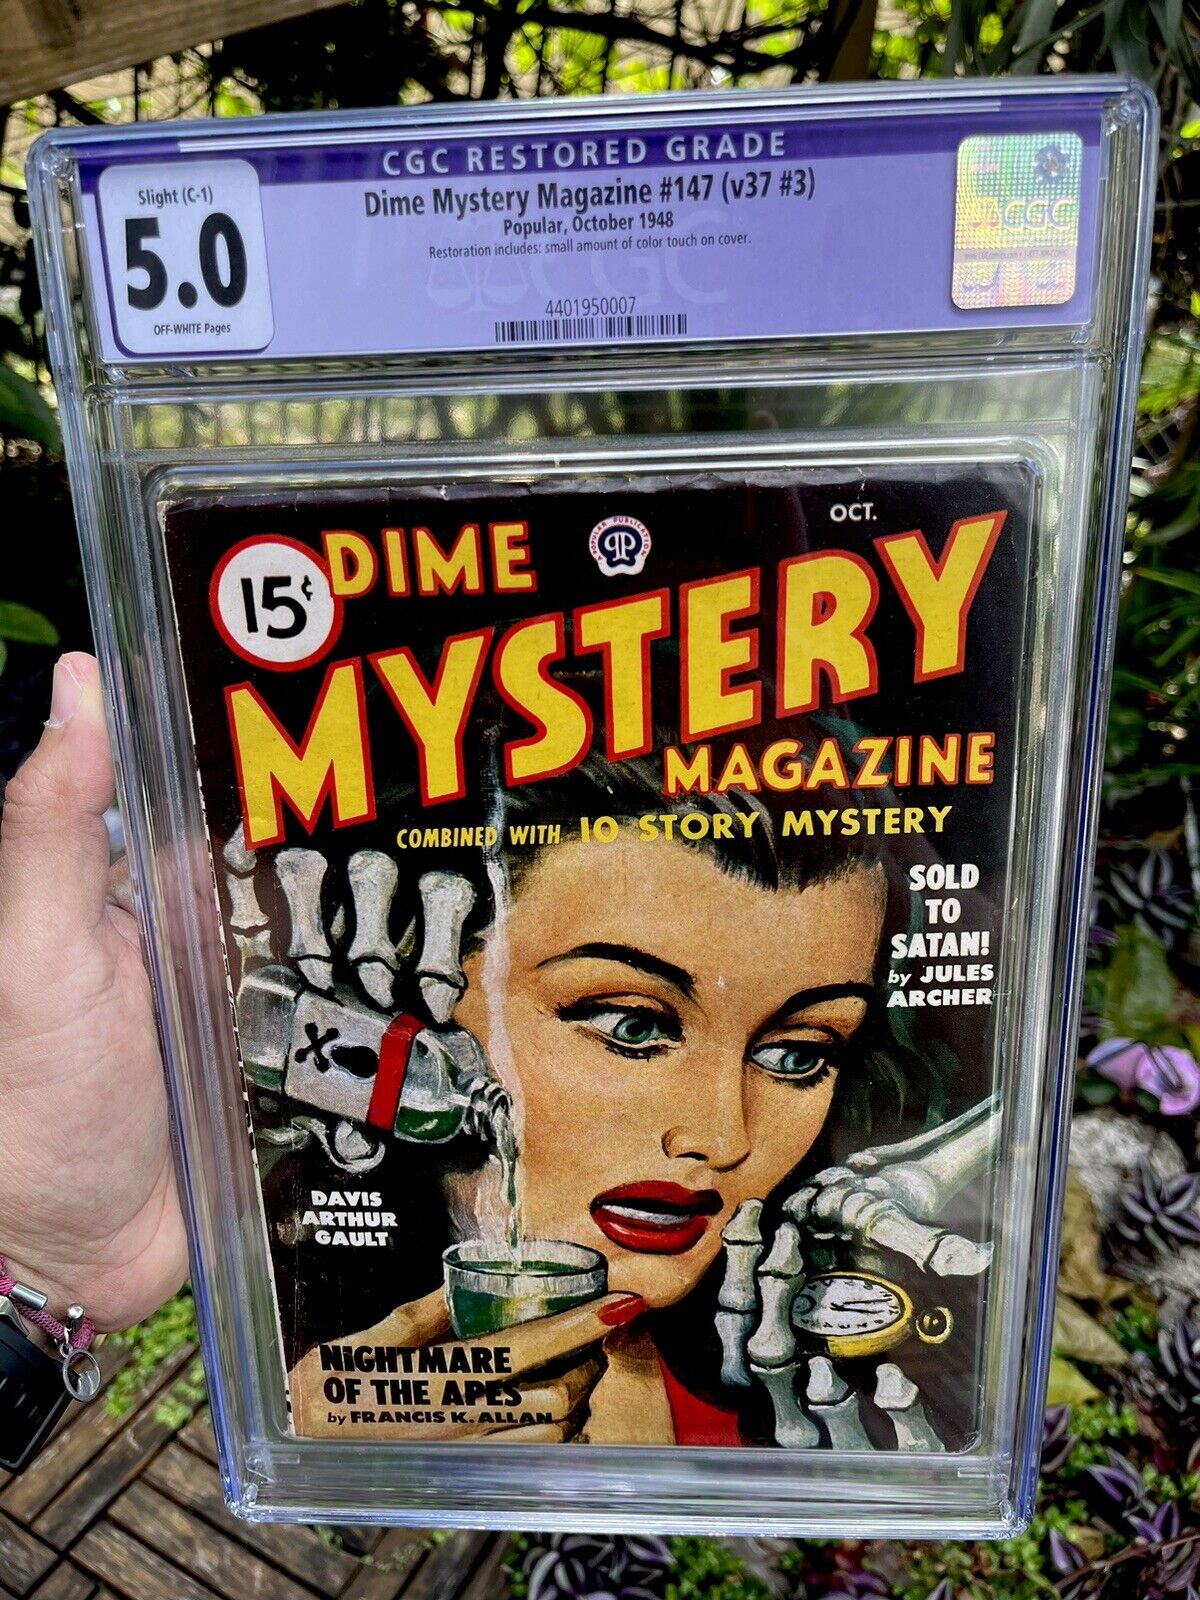 Dime Mystery Magazine #147 V37 #3 October 1948 Slight Restoration CGC 5.0 Pulp